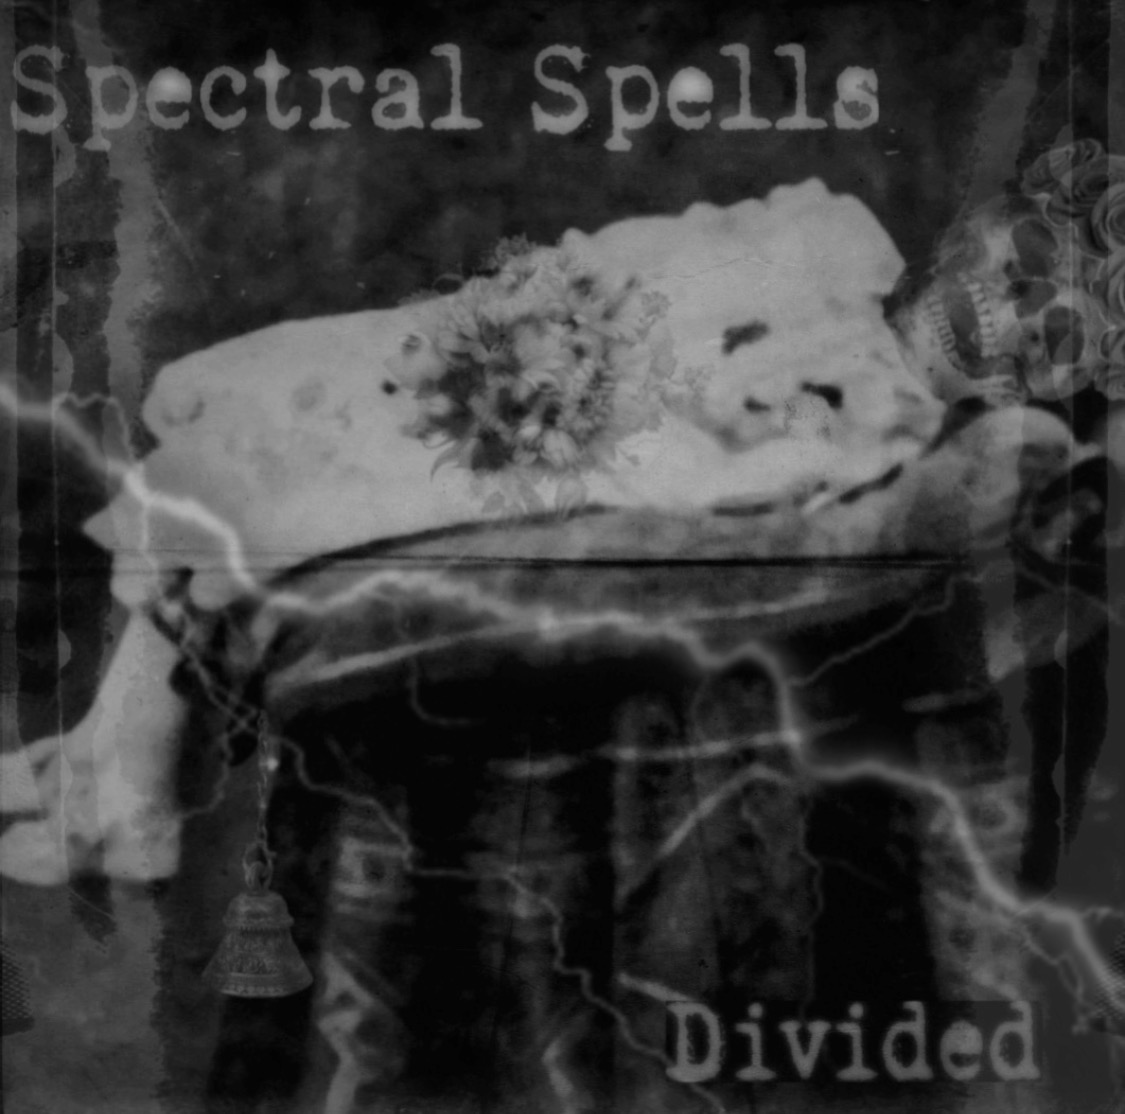 spectralspells.bandcamp.com/track/divided #SpectralSpells #Dark #Darkwave #Electronic #ColdWave #MinimalSynth #PostPunk #Goth #NewYork